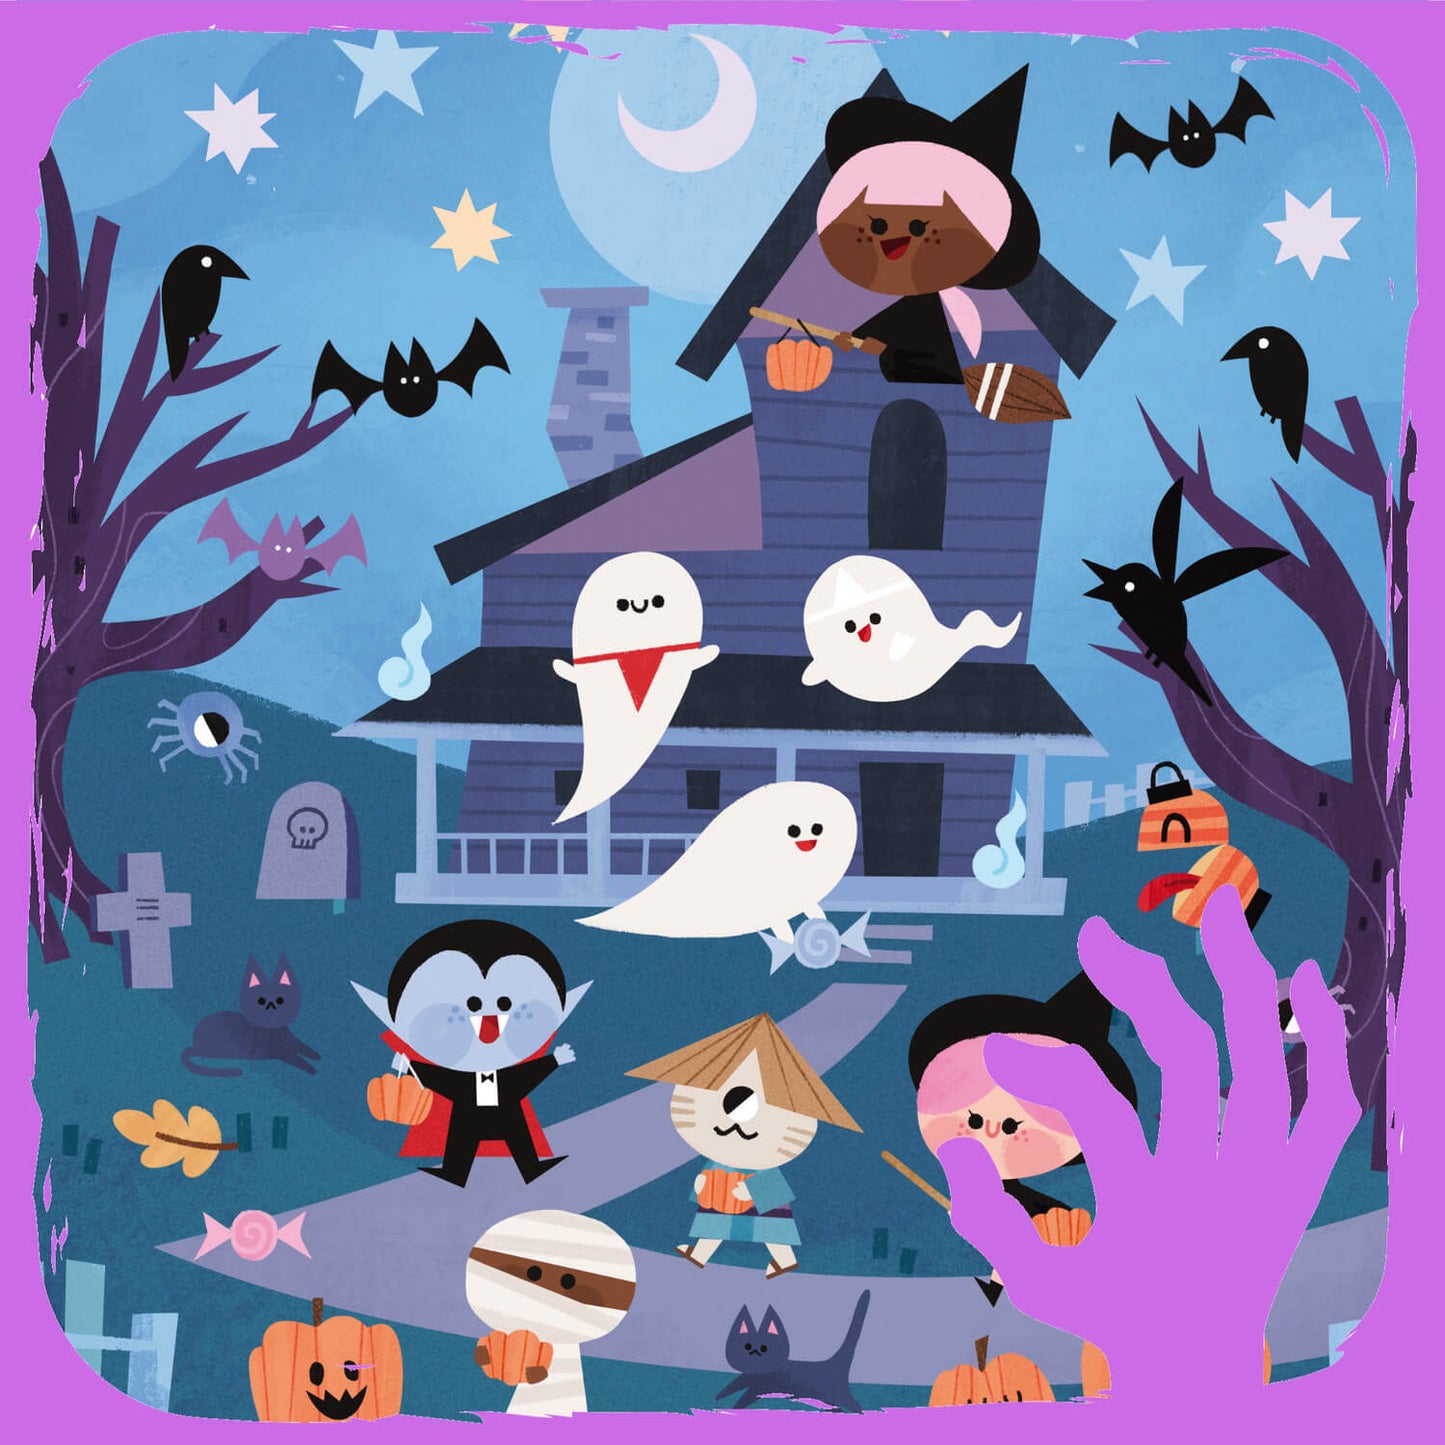 Spooky Halloween Night Sticker Book